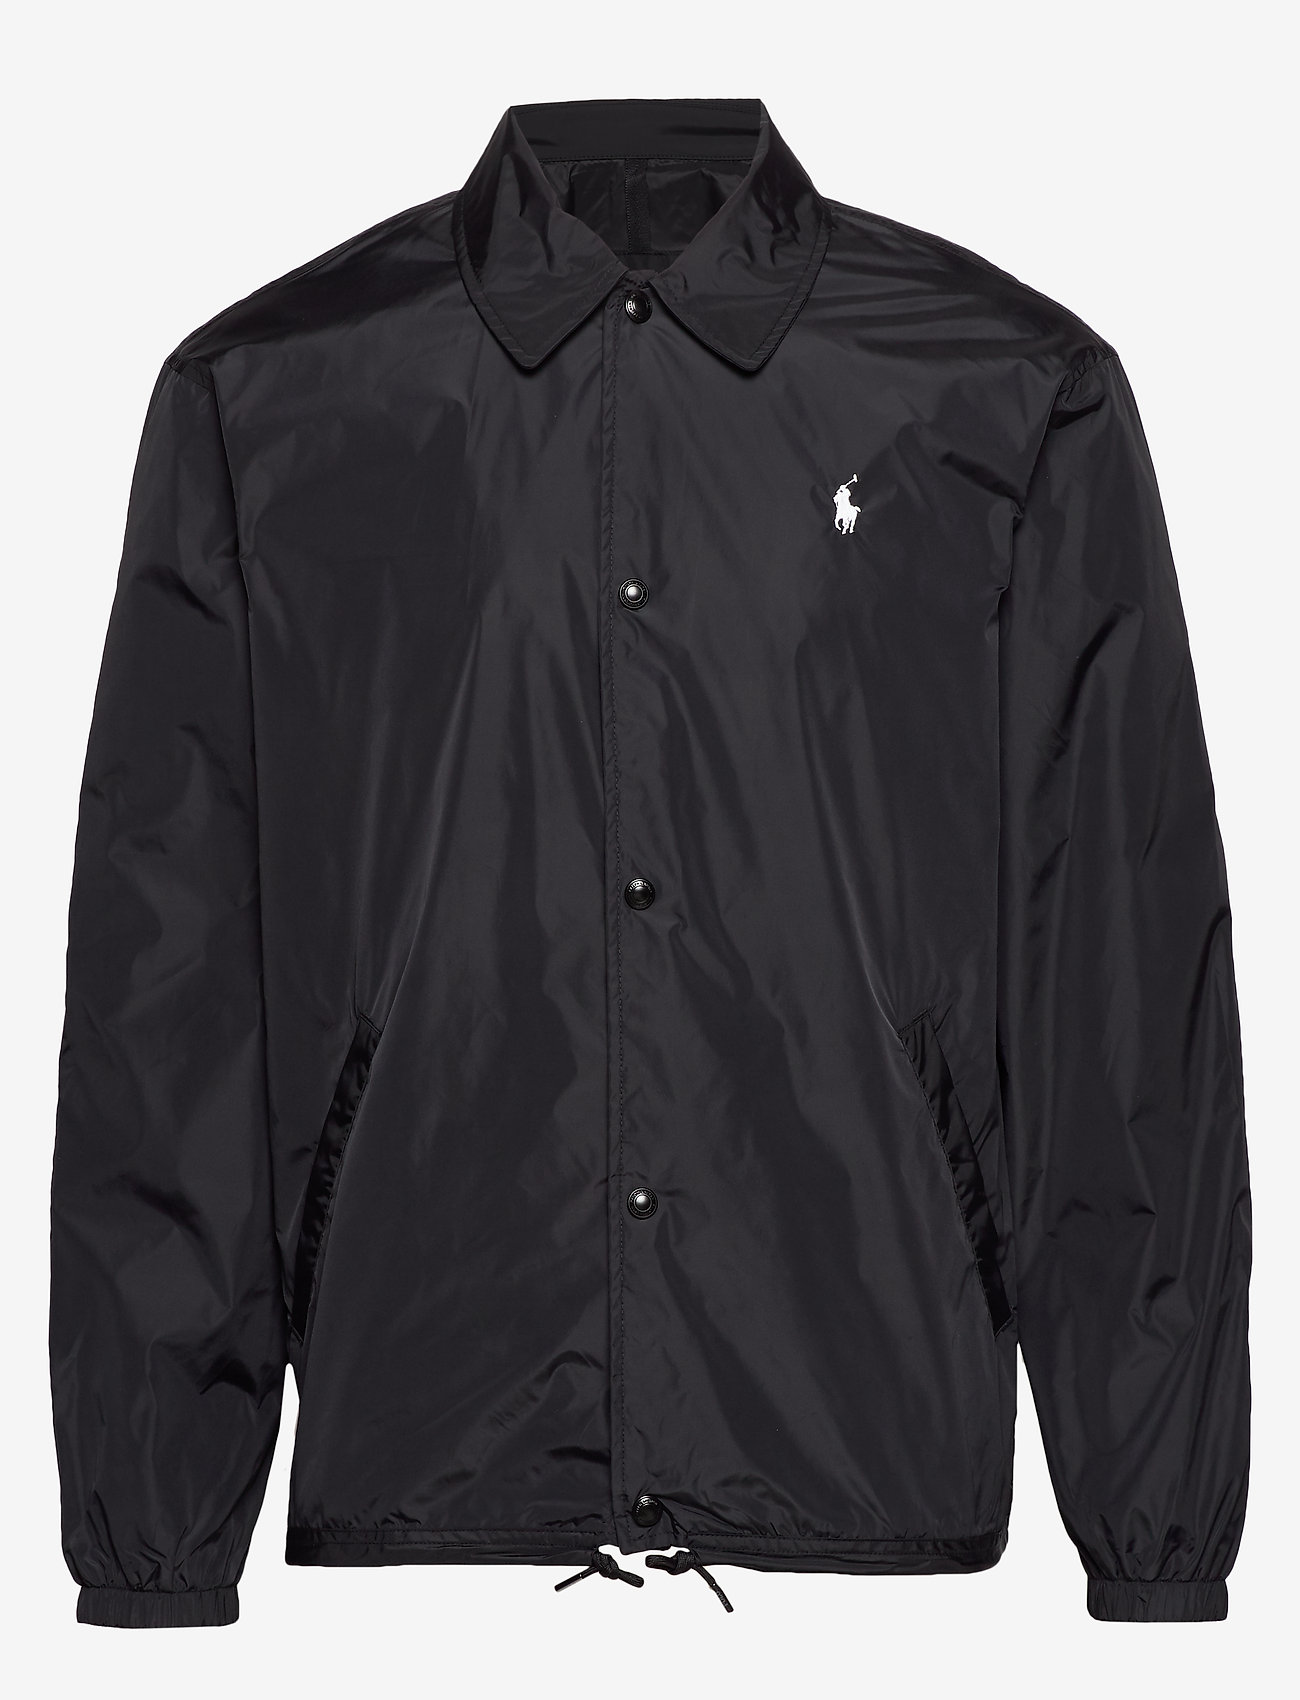 Coach Jacket (Polo Black) (129.35 €) - Polo Ralph Lauren - | Boozt.com